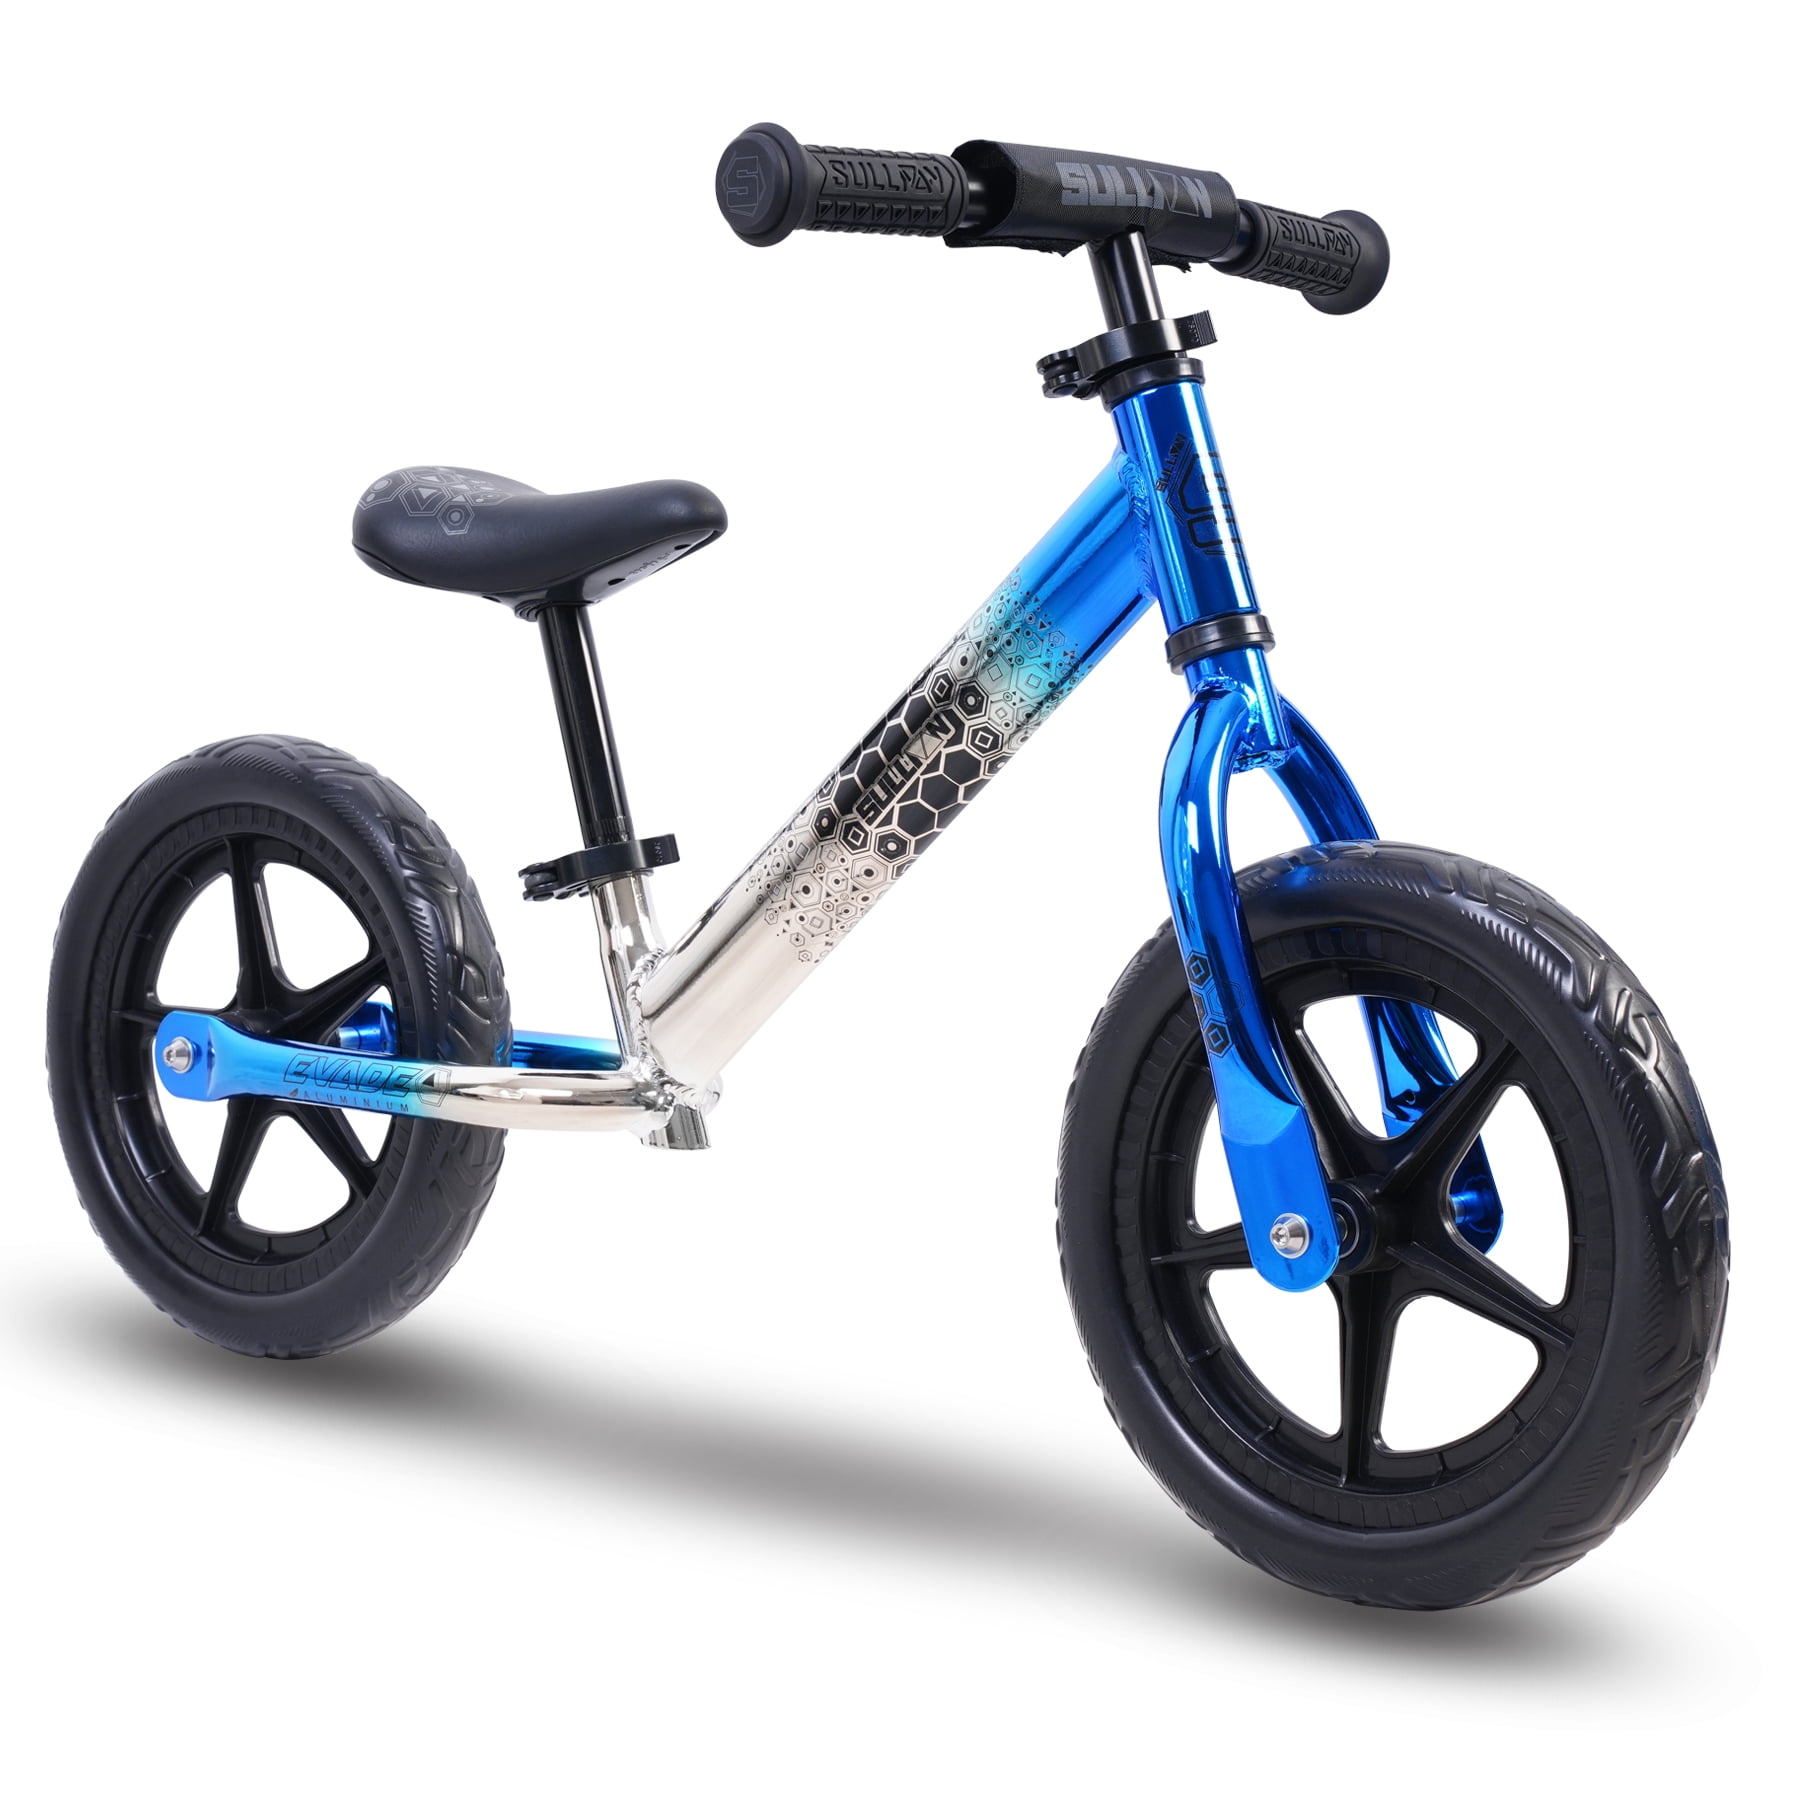 Sullivan Evade 12 light weight alloy balance bike blue/chrome, for ages 2-5 years, rapid motor control development